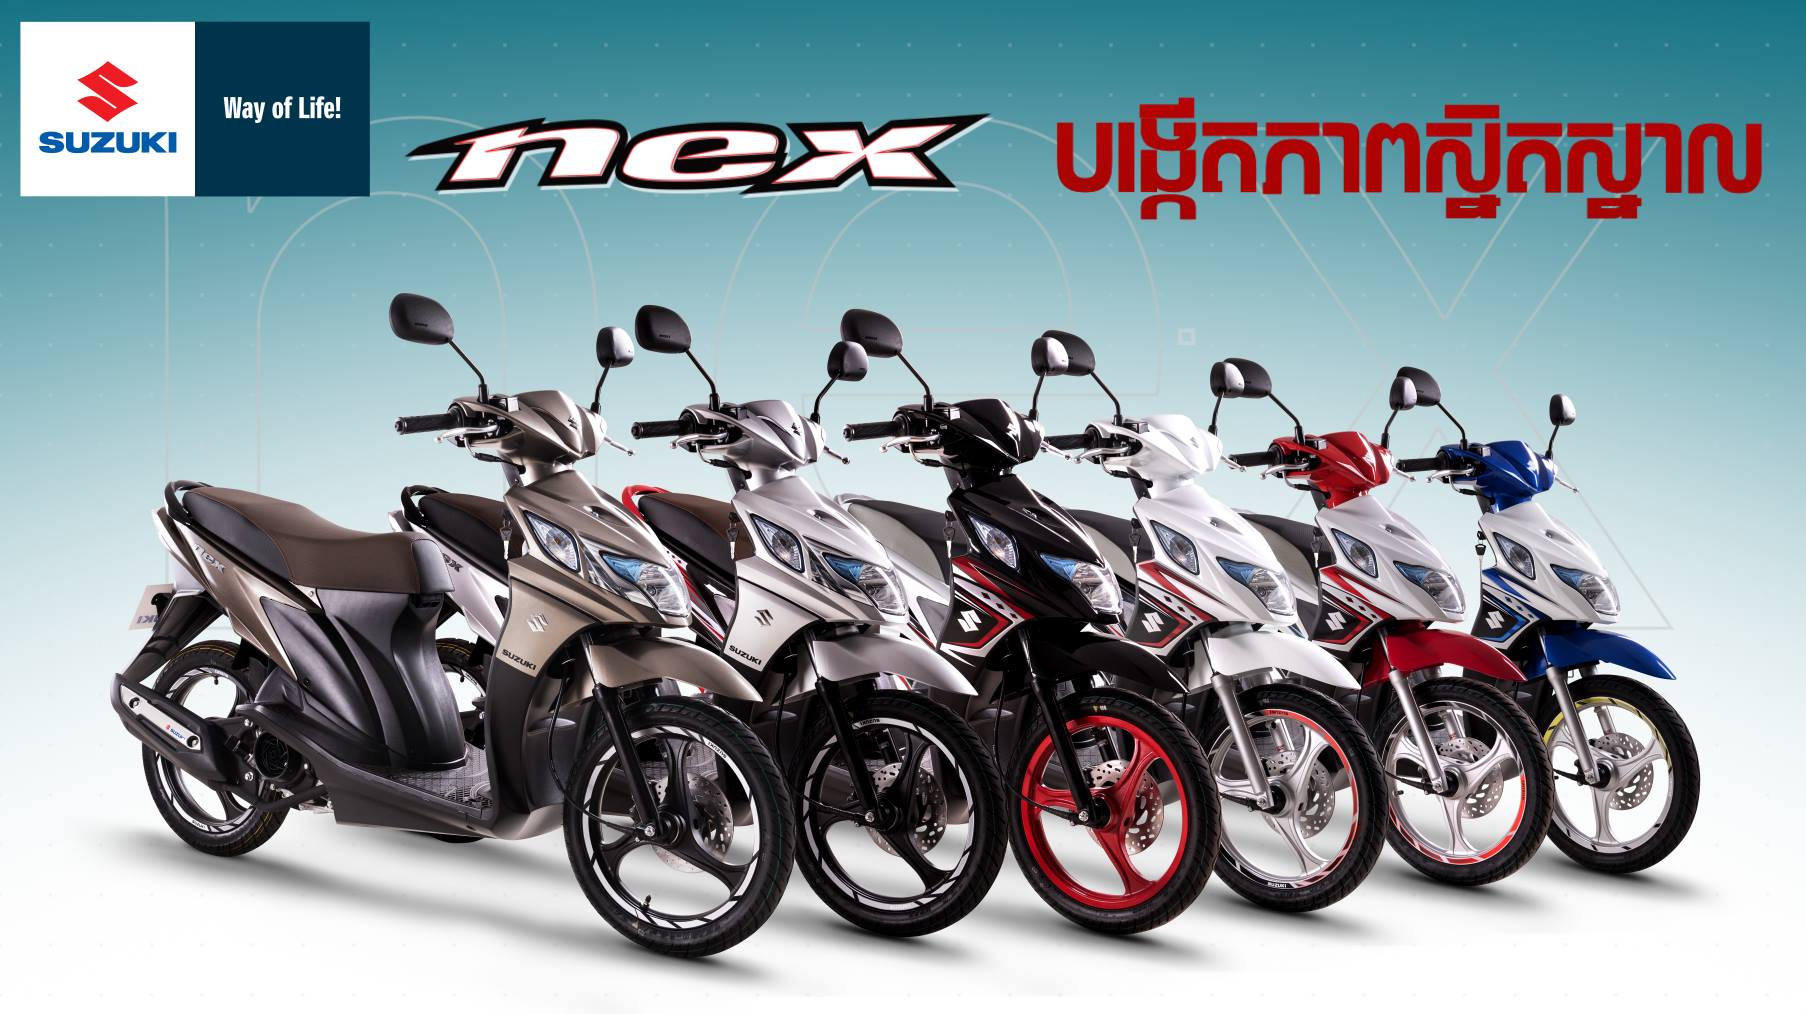  Suzuki  nex  2019  5 Khmer Motors  